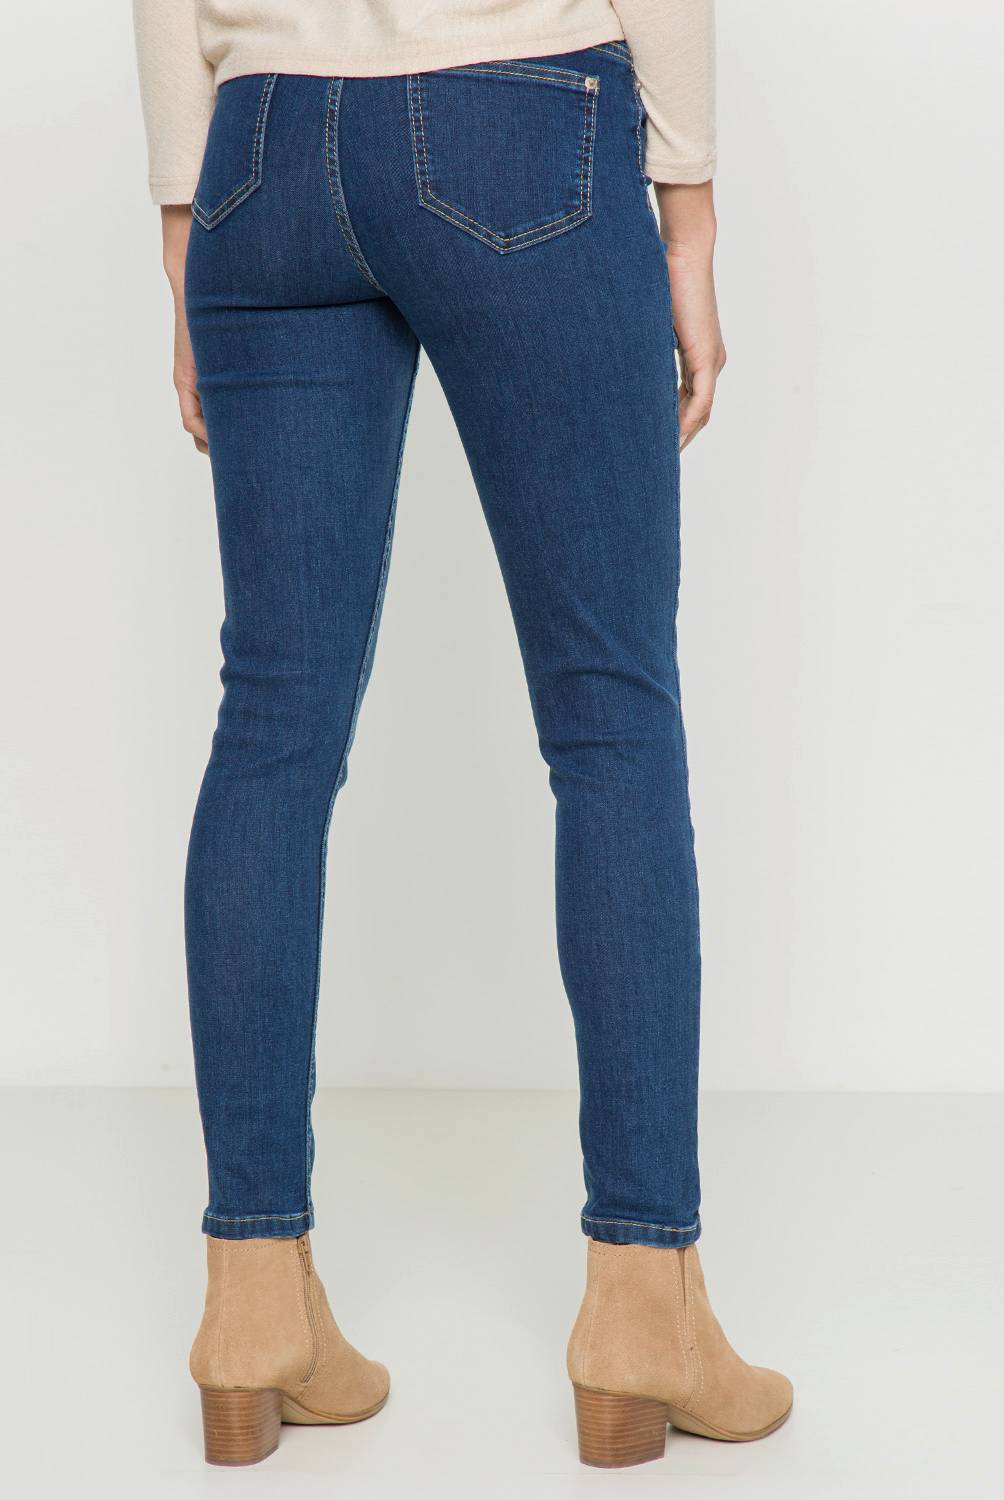 UNIVERSITY CLUB - Jeans Skinny Alto Mujer